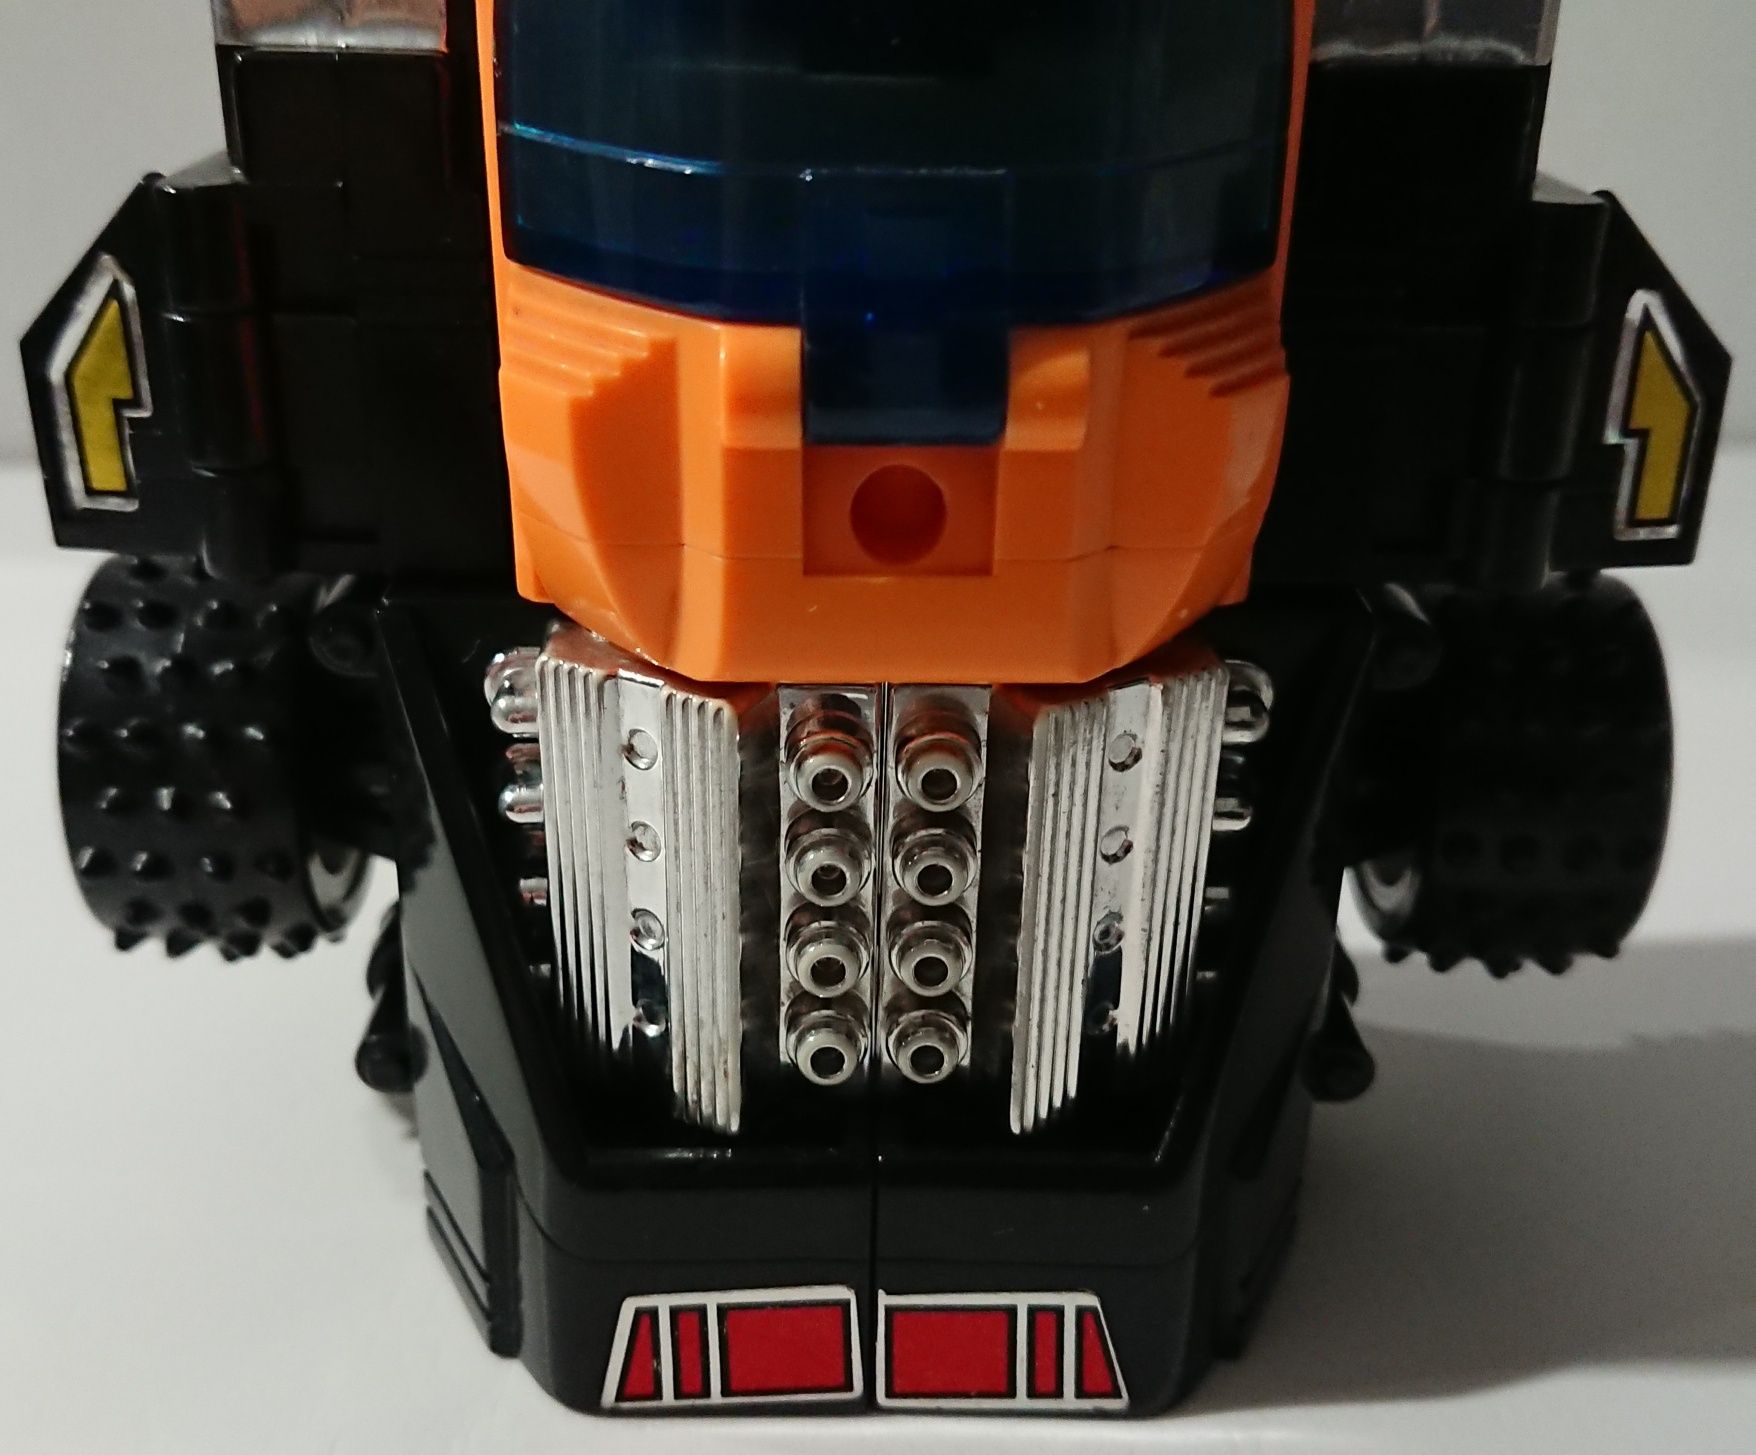 Transformers Motorvator Gripper G1 1989